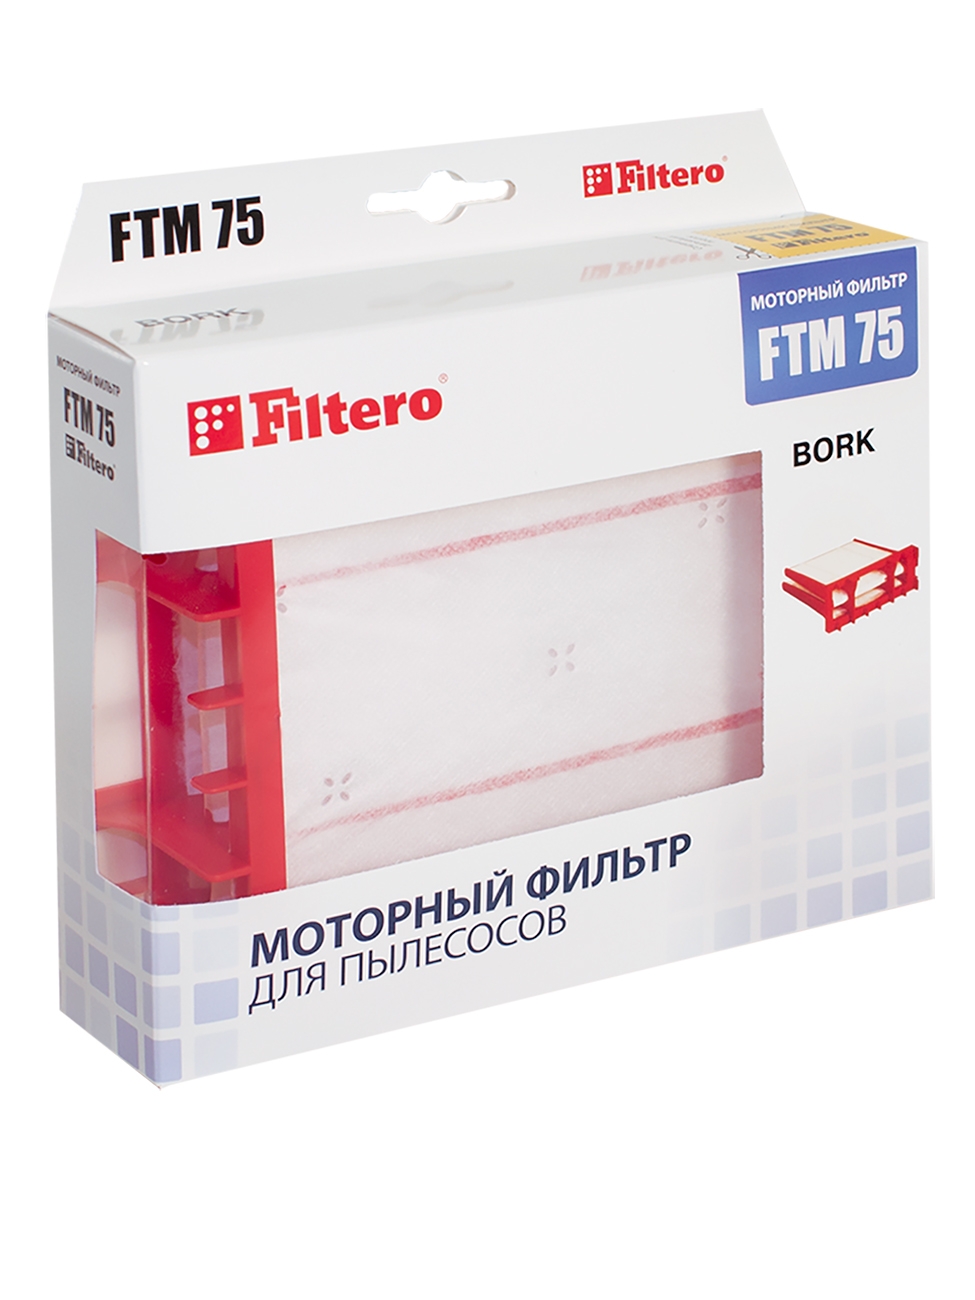 цена Фильтр моторный Filtero FTM 75 BRK Bork